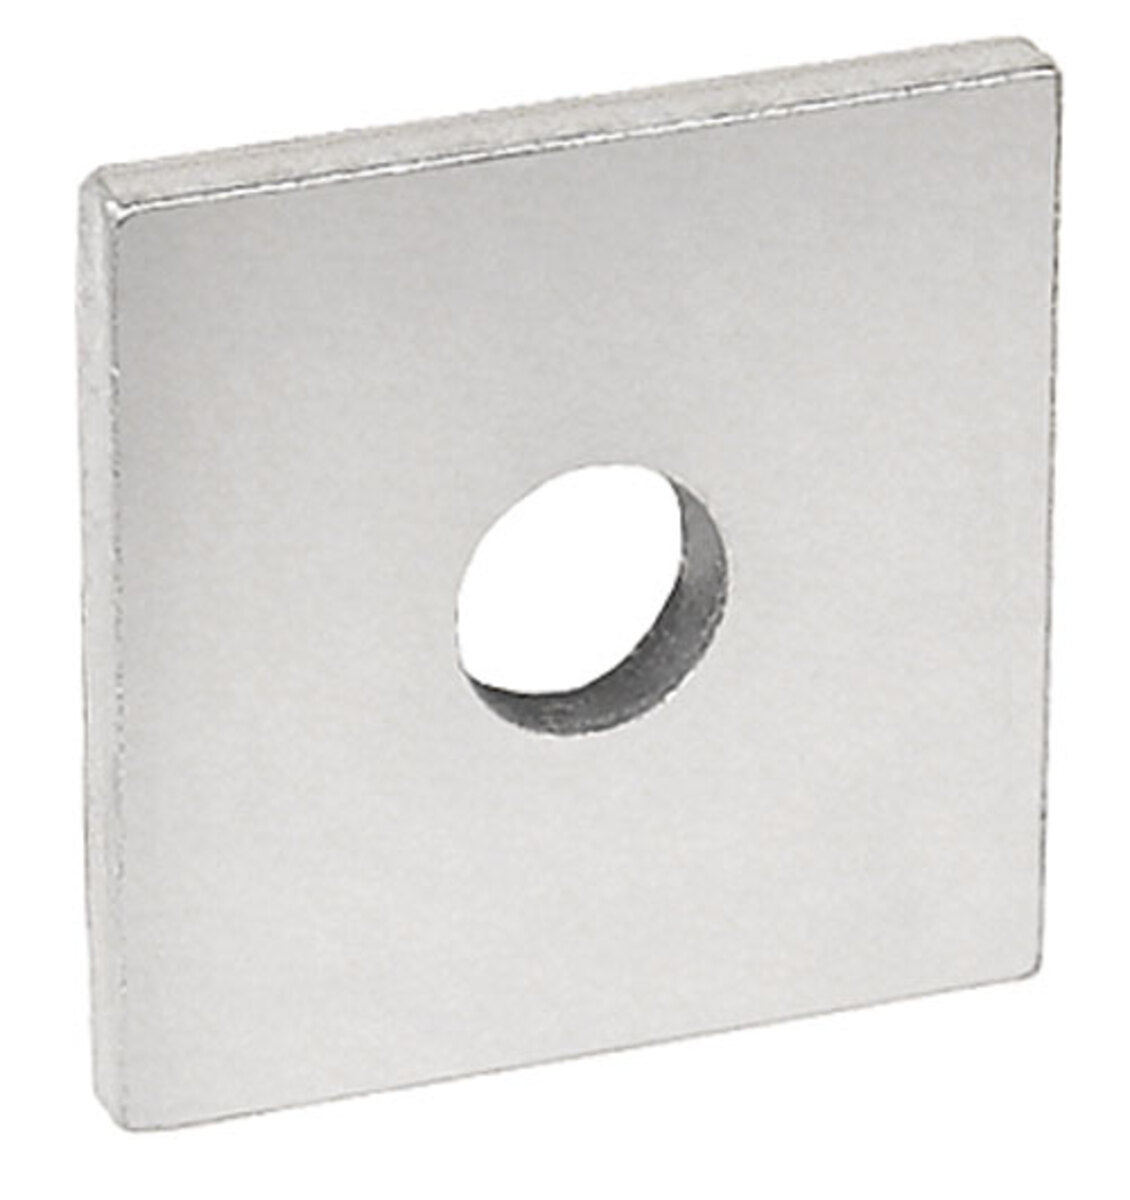 Square Strut Washer For 3/8" Bolt Zinc Plated Steel, 1-5/8", 100 Pack